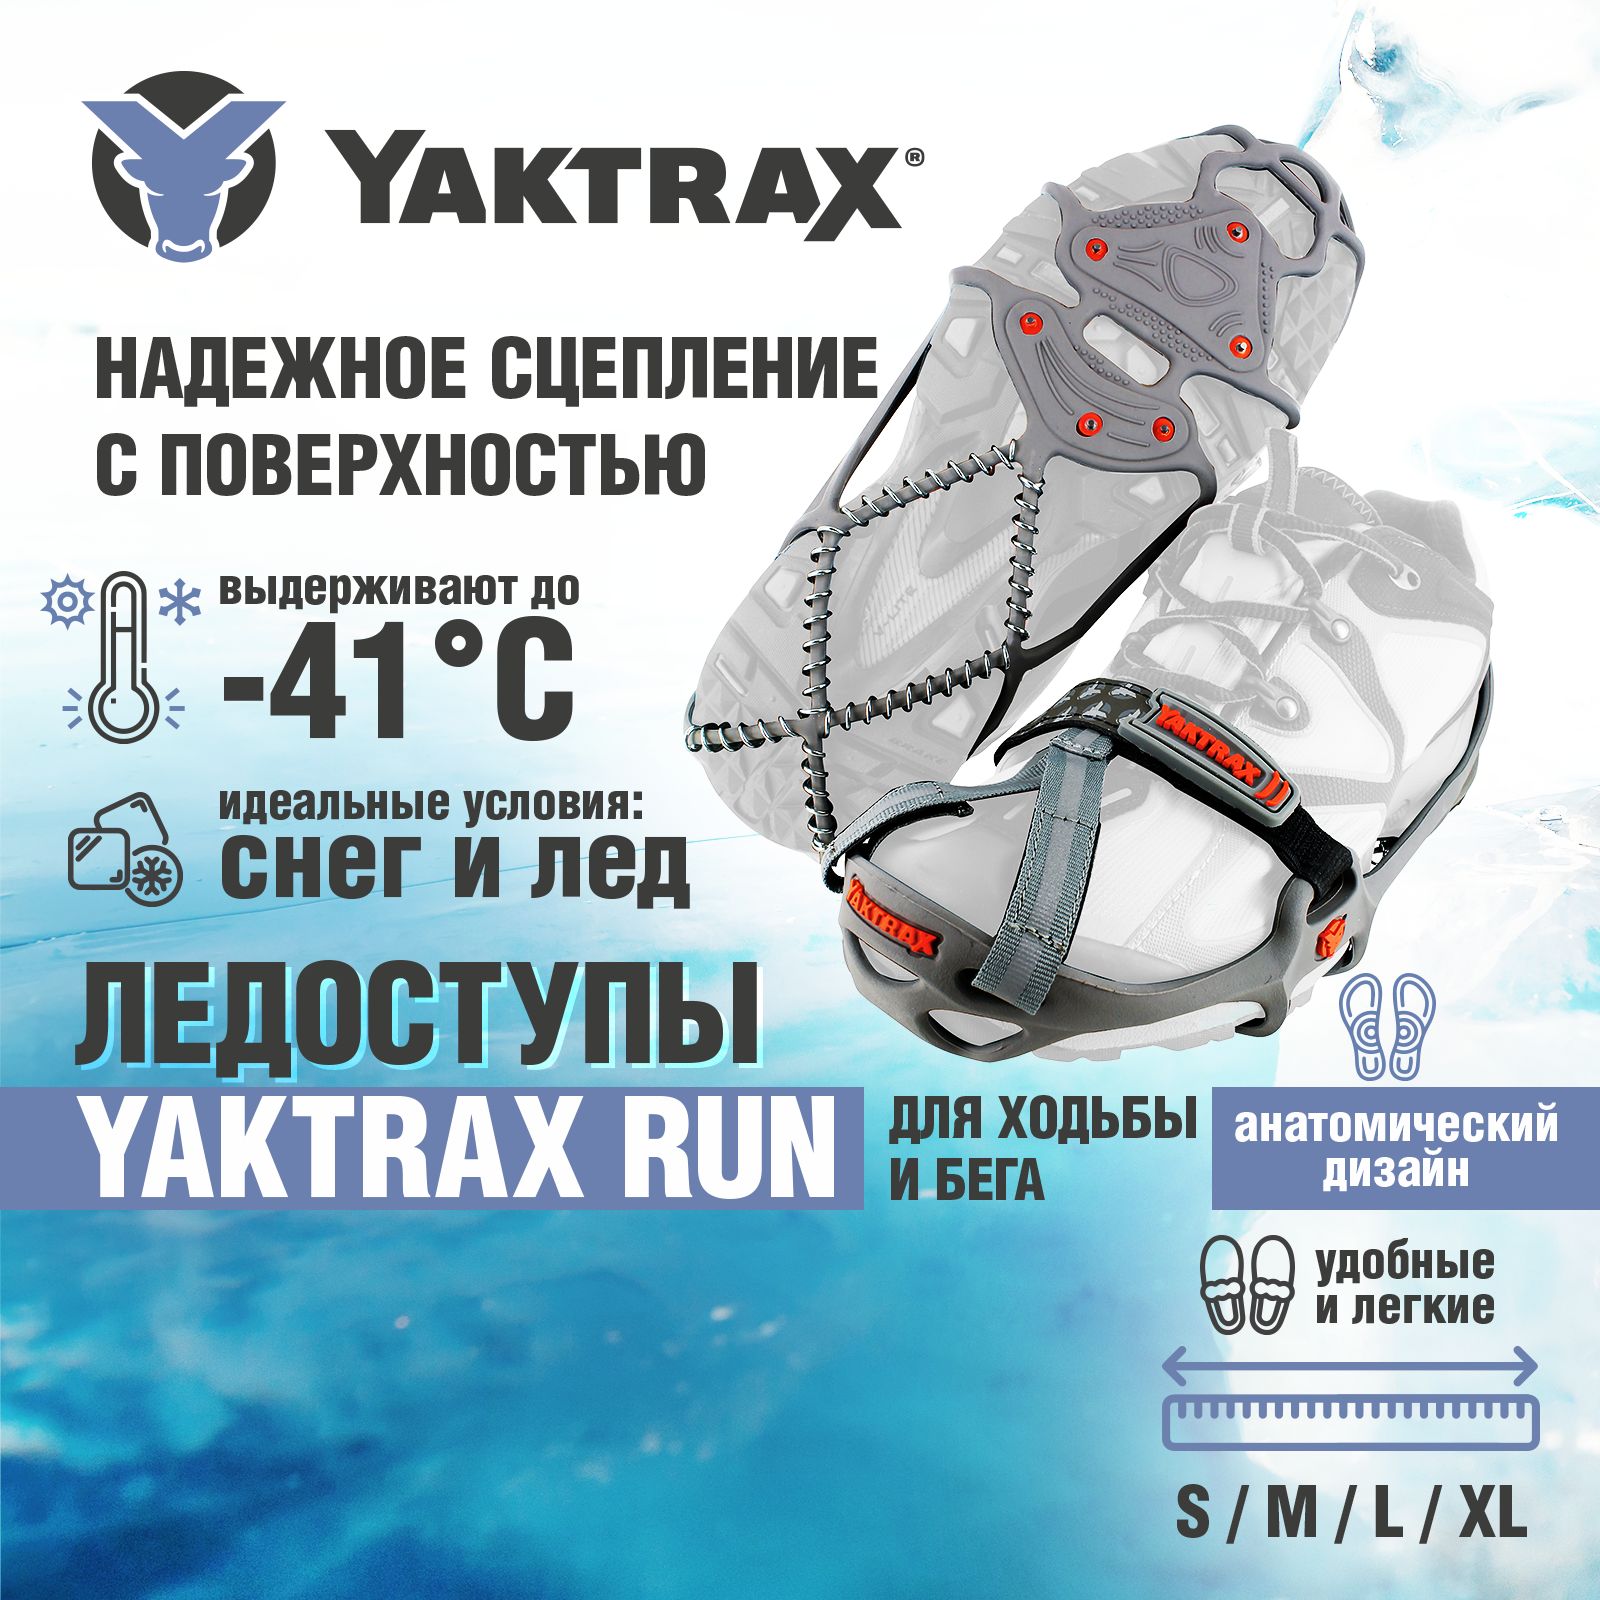 Ледоступы Yaktax Run, размер 44-46